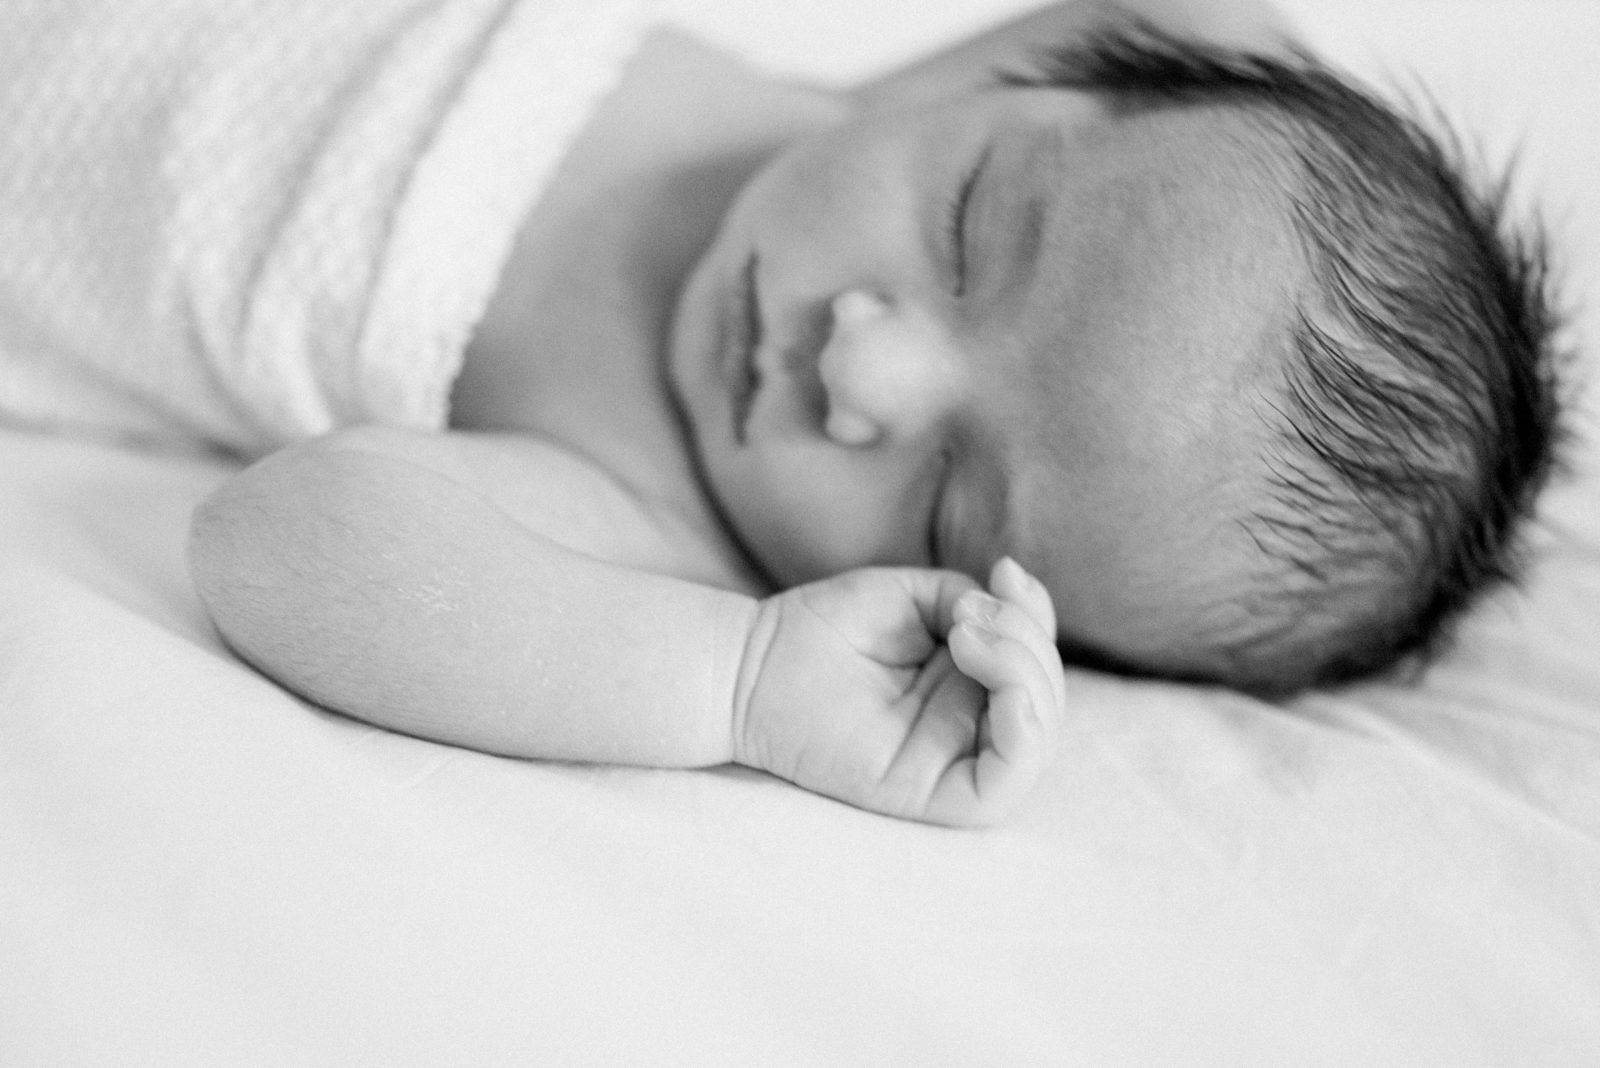 Black and white image of a sleeping newborn